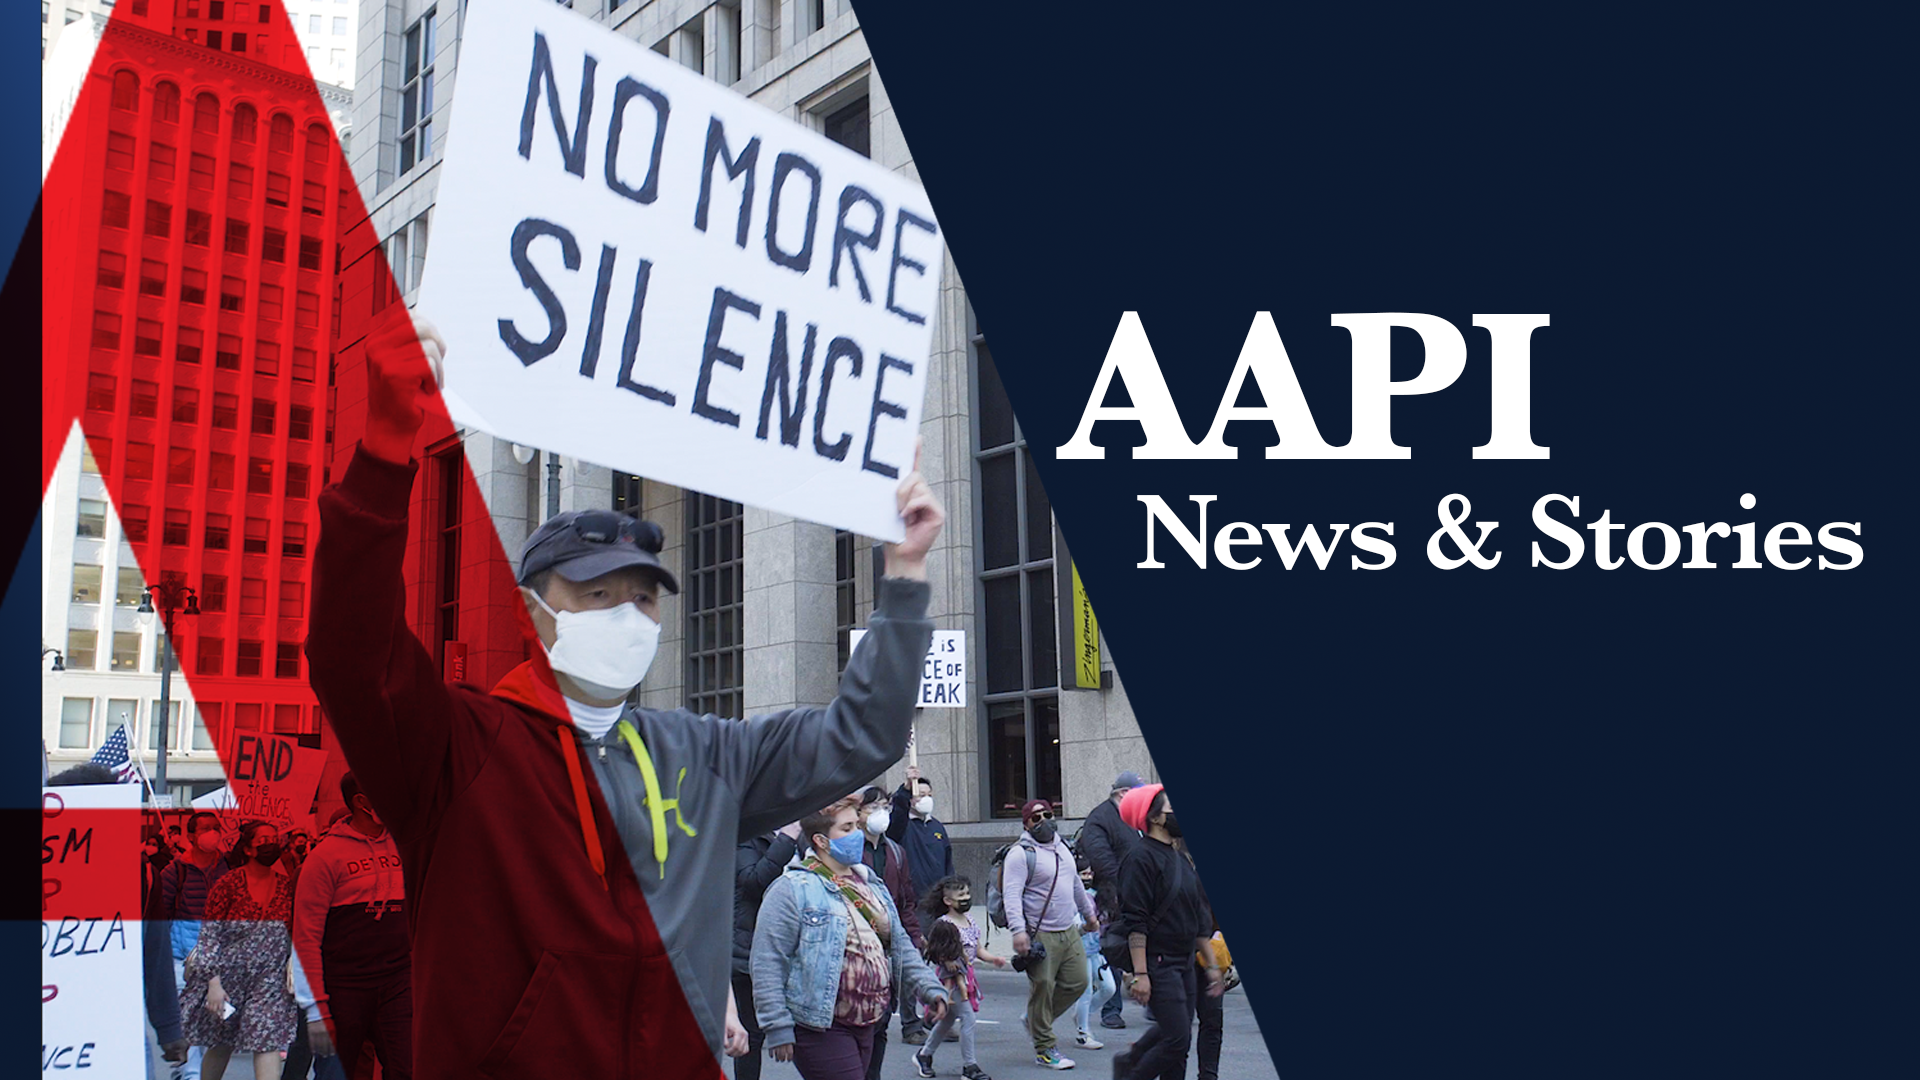 AAPI News & Stories